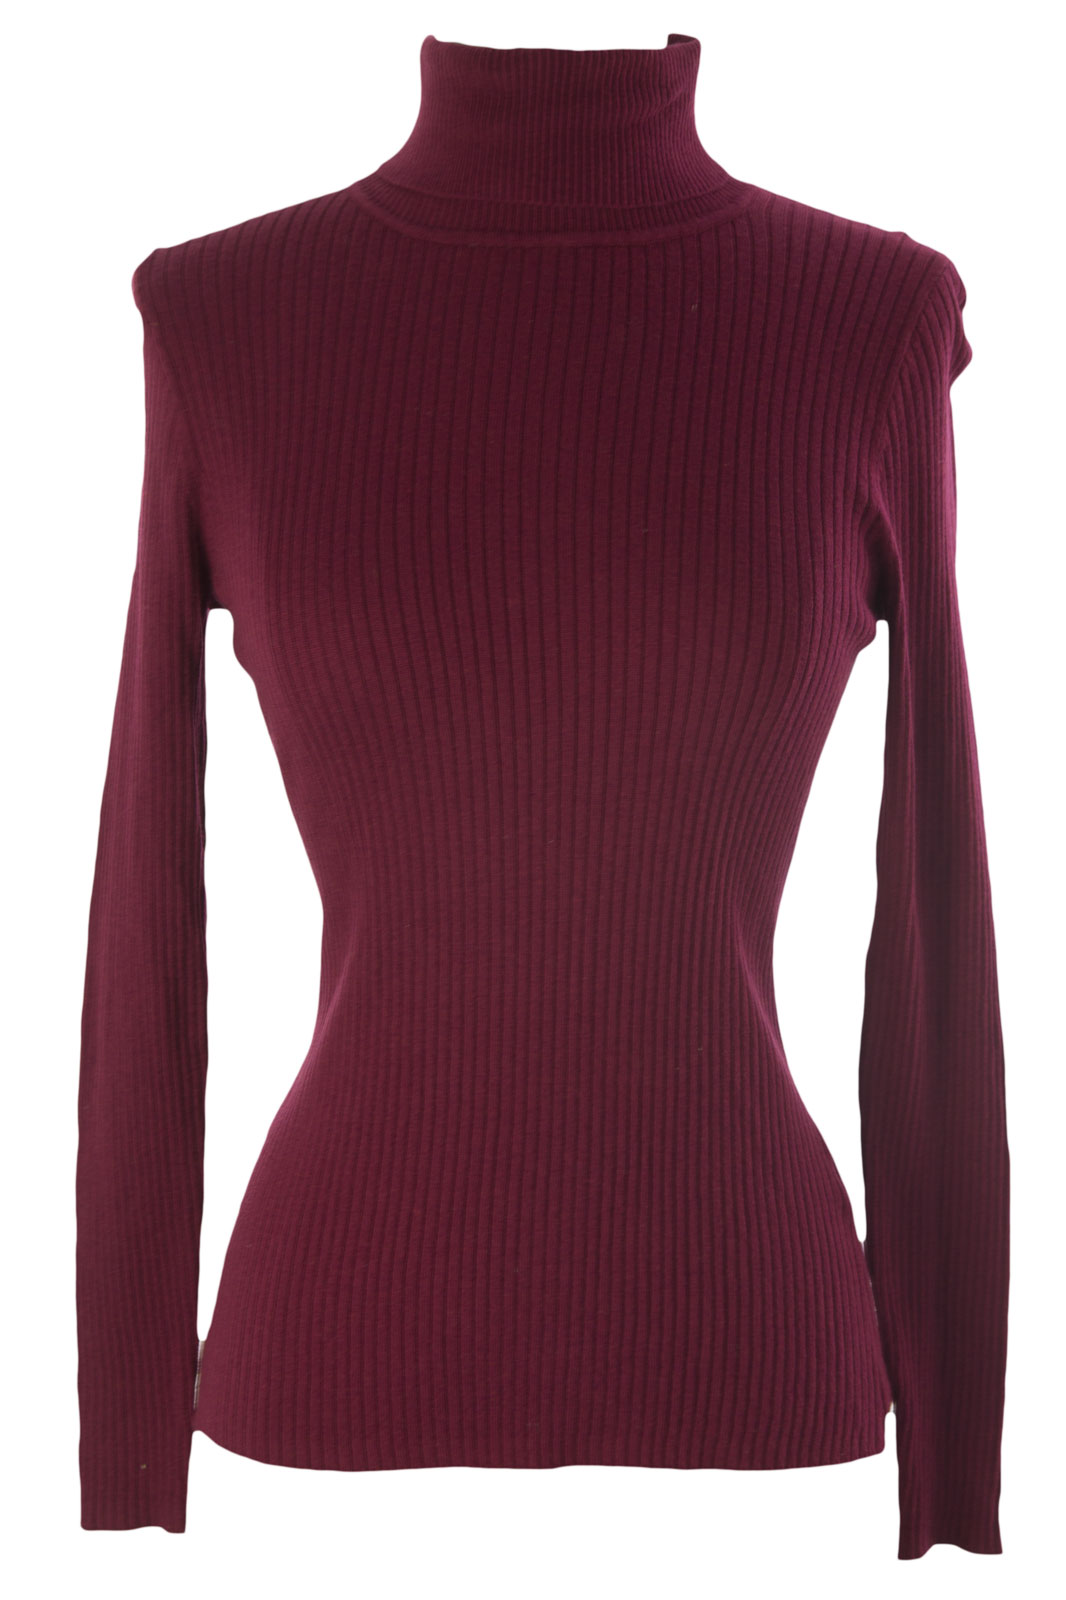 August Silk Women's Petite Rib Knit Turtleneck Sweater NWT $58 | eBay